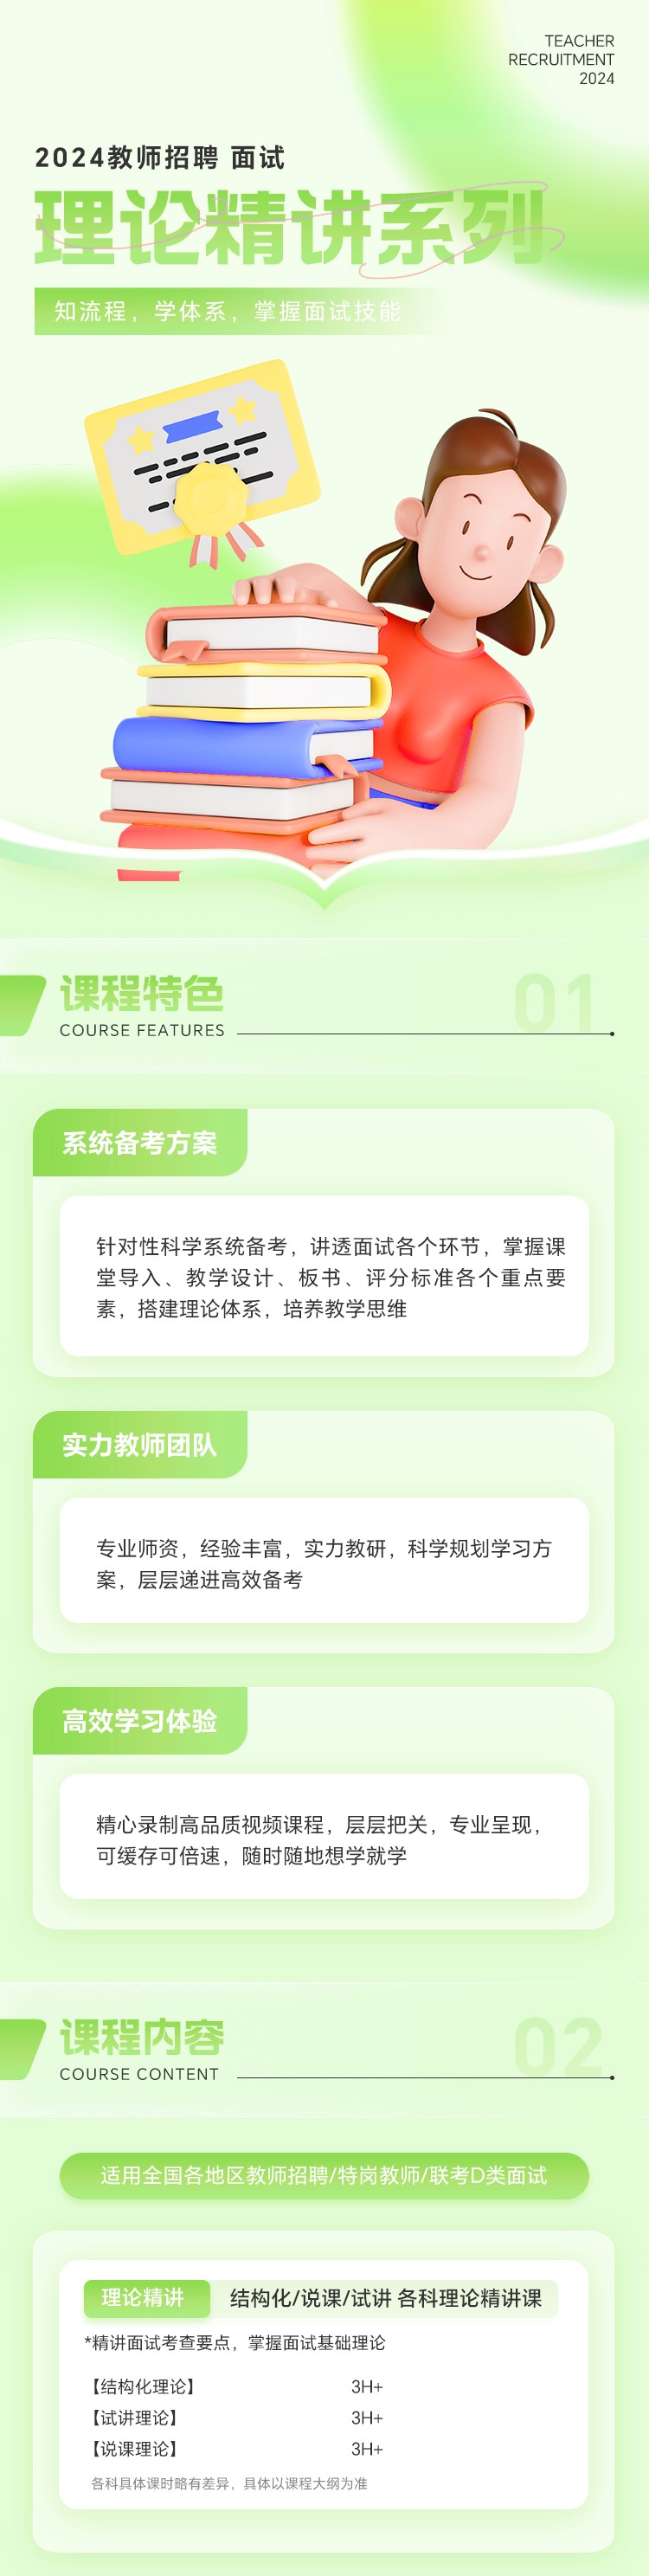 https://simg01.gaodunwangxiao.com/uploadfiles/product-center/202404/23/edce5_20240423111430.jpg